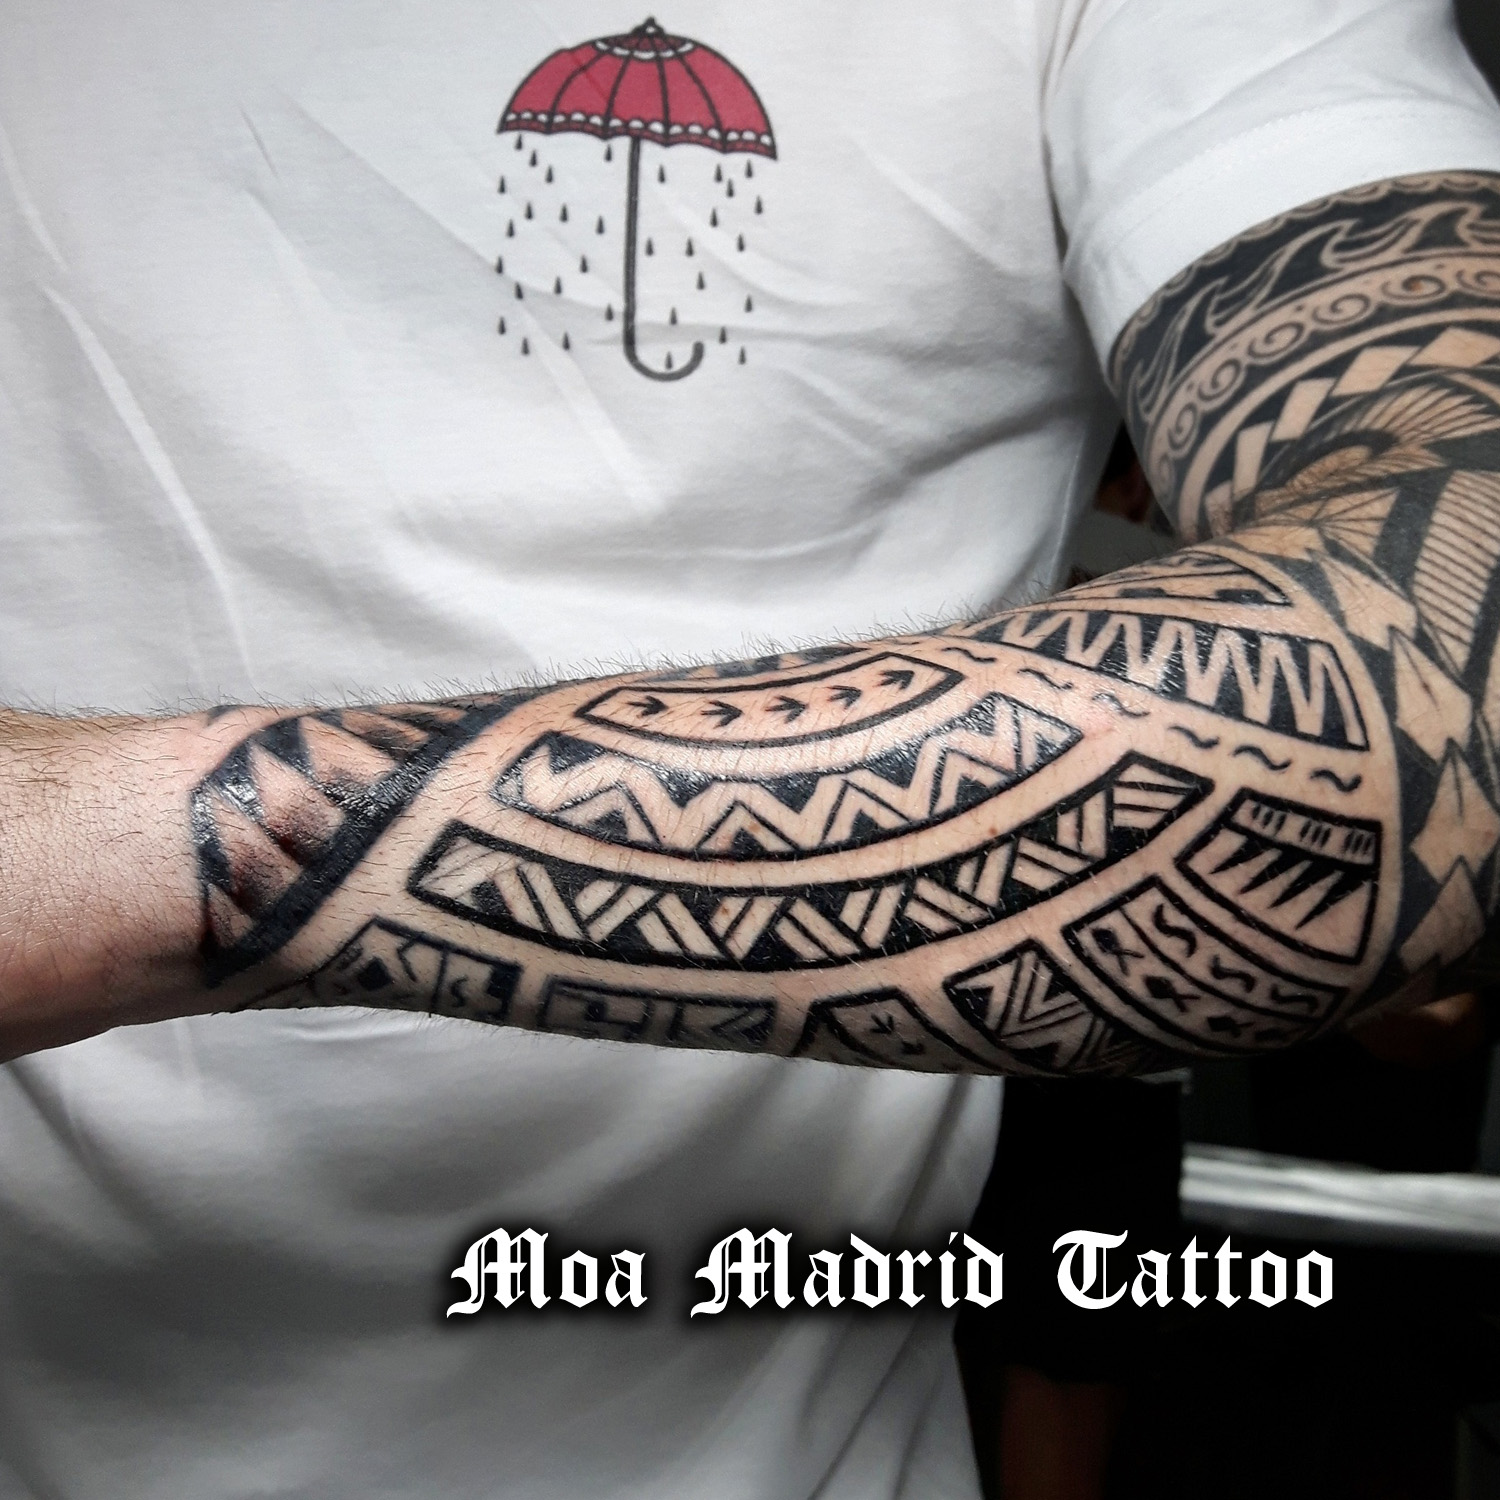 Tatuaje samoano rodeando el antebrazo